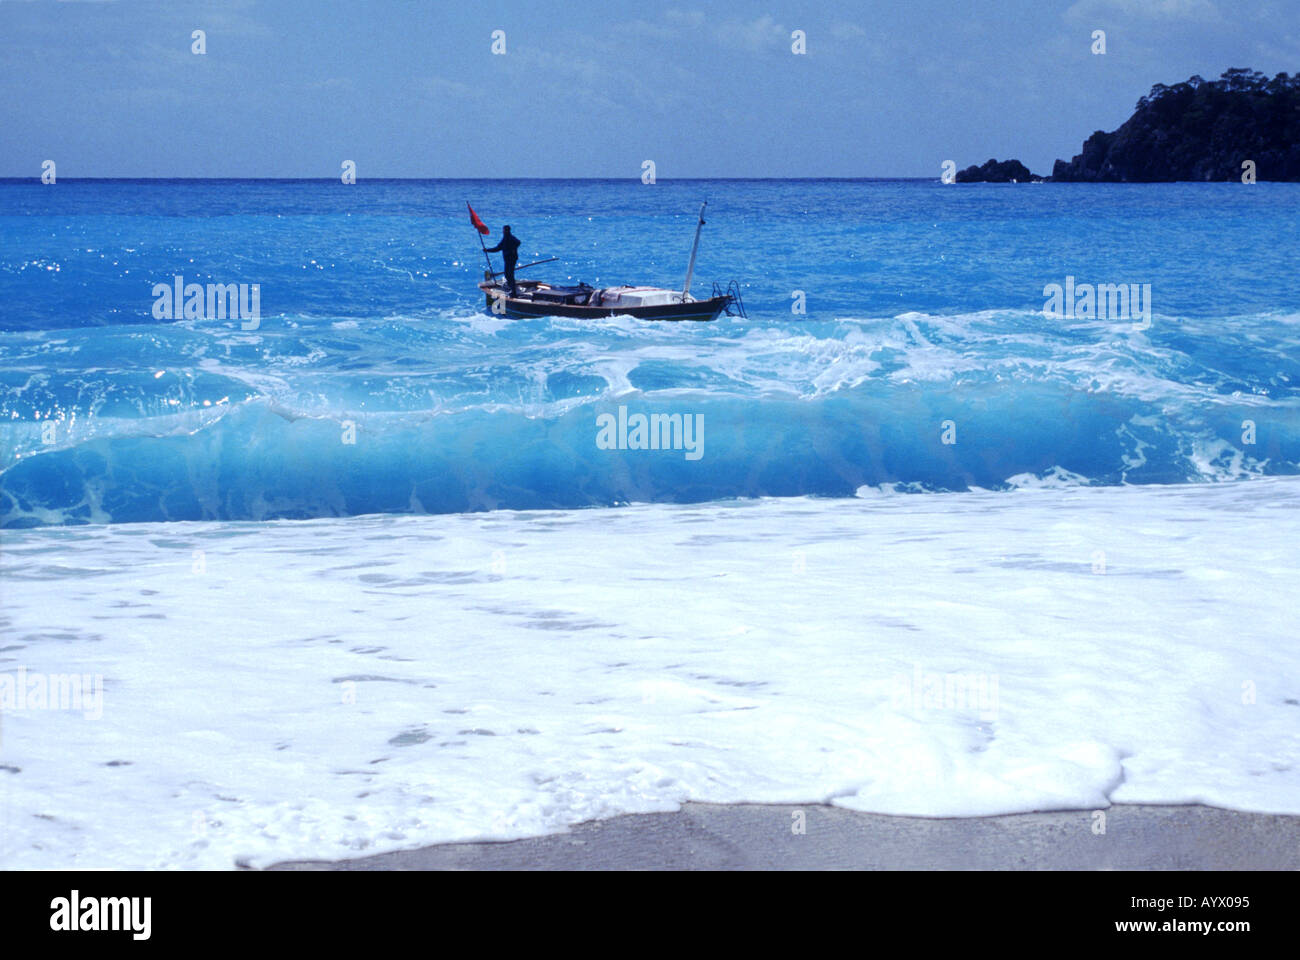 Light blue water white foam breaking waves on sandy Mediterranean beach fishermen standing on wooden boat. Stock Photo